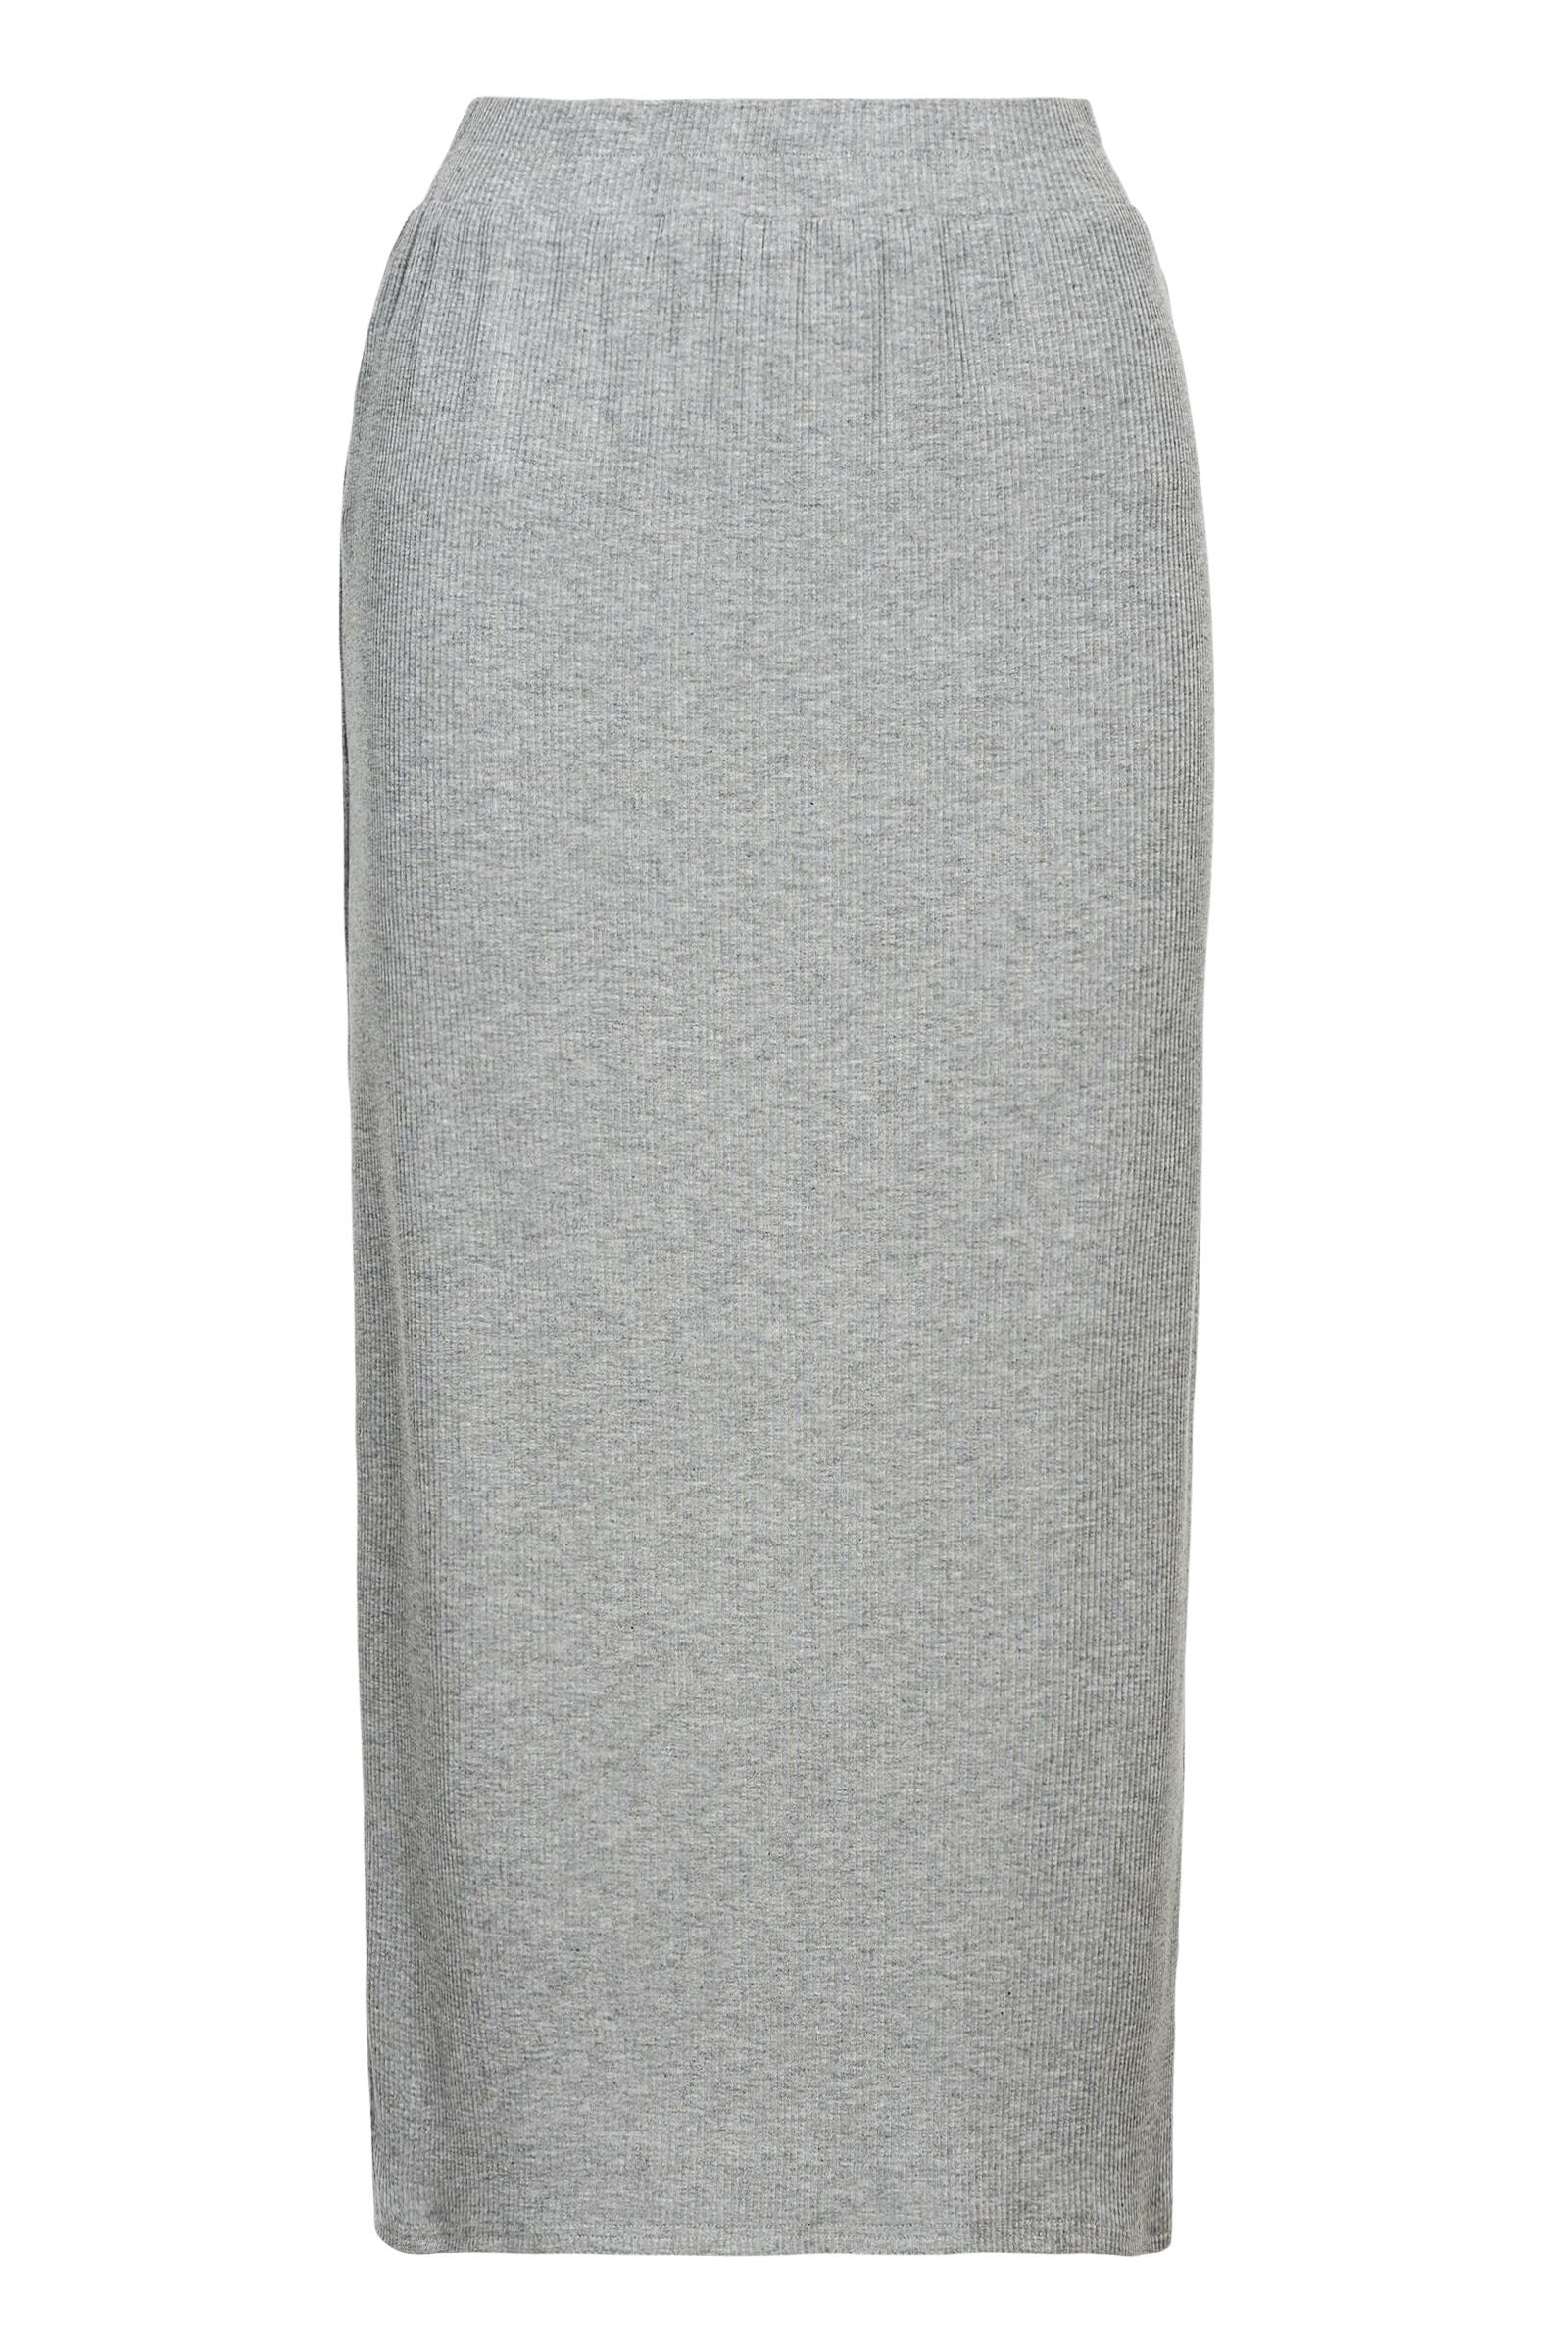 Eb &amp; Ive Grey Ribbed Skirt